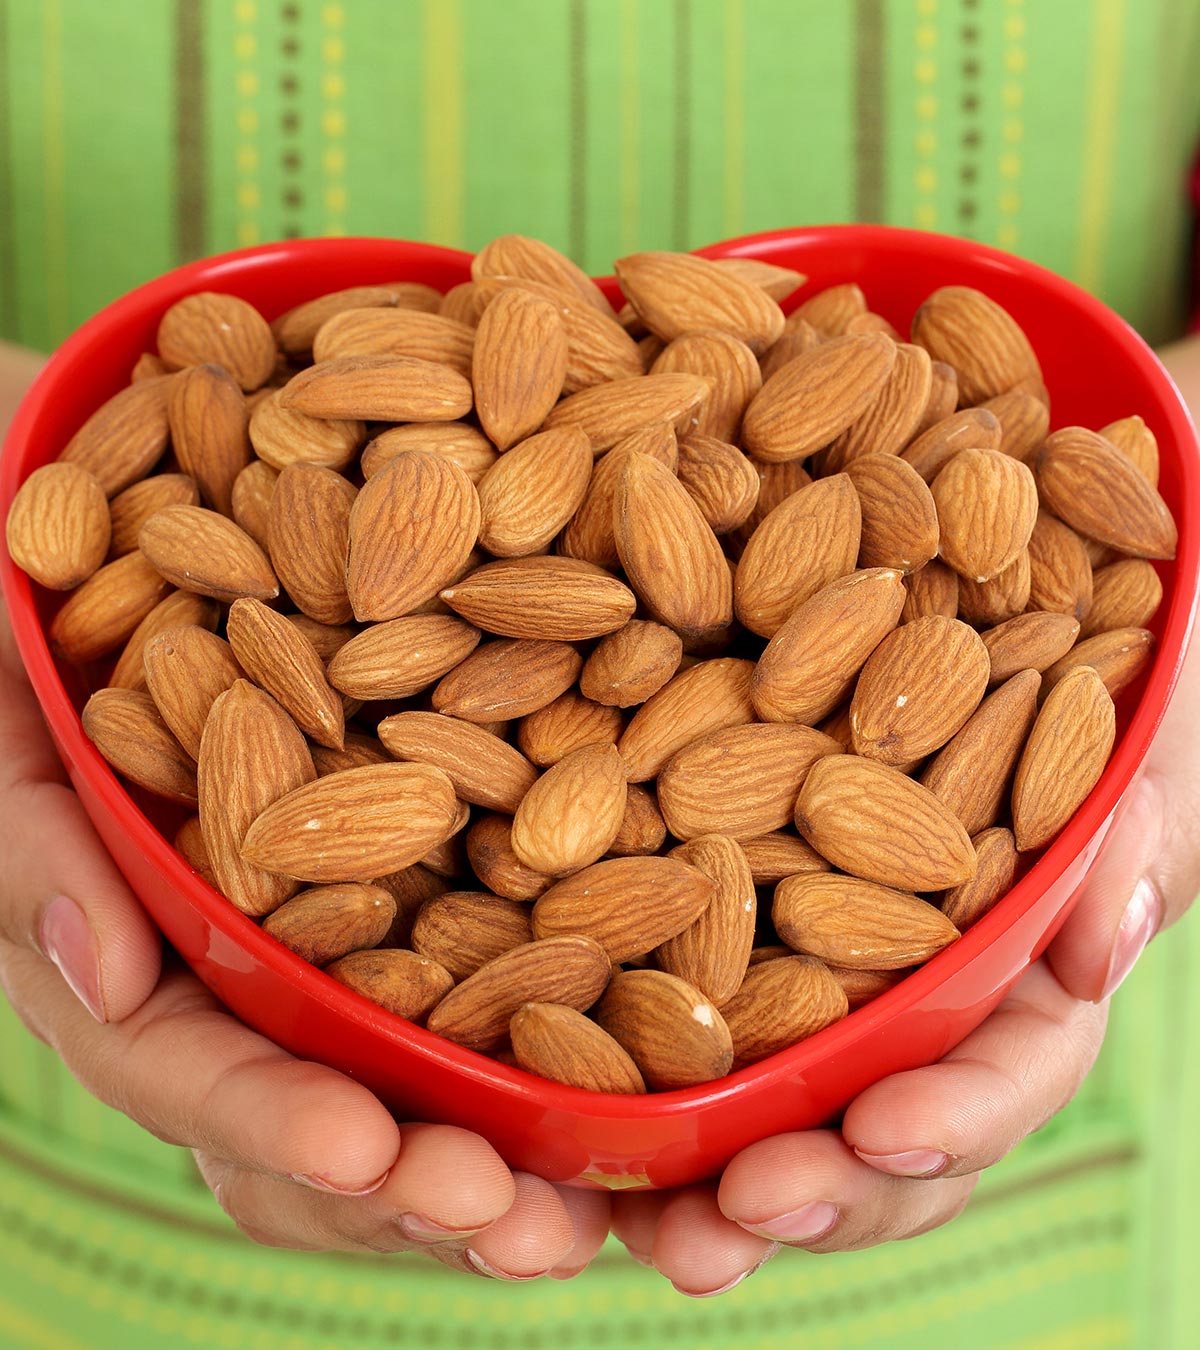 Having Almonds During Pregnancy